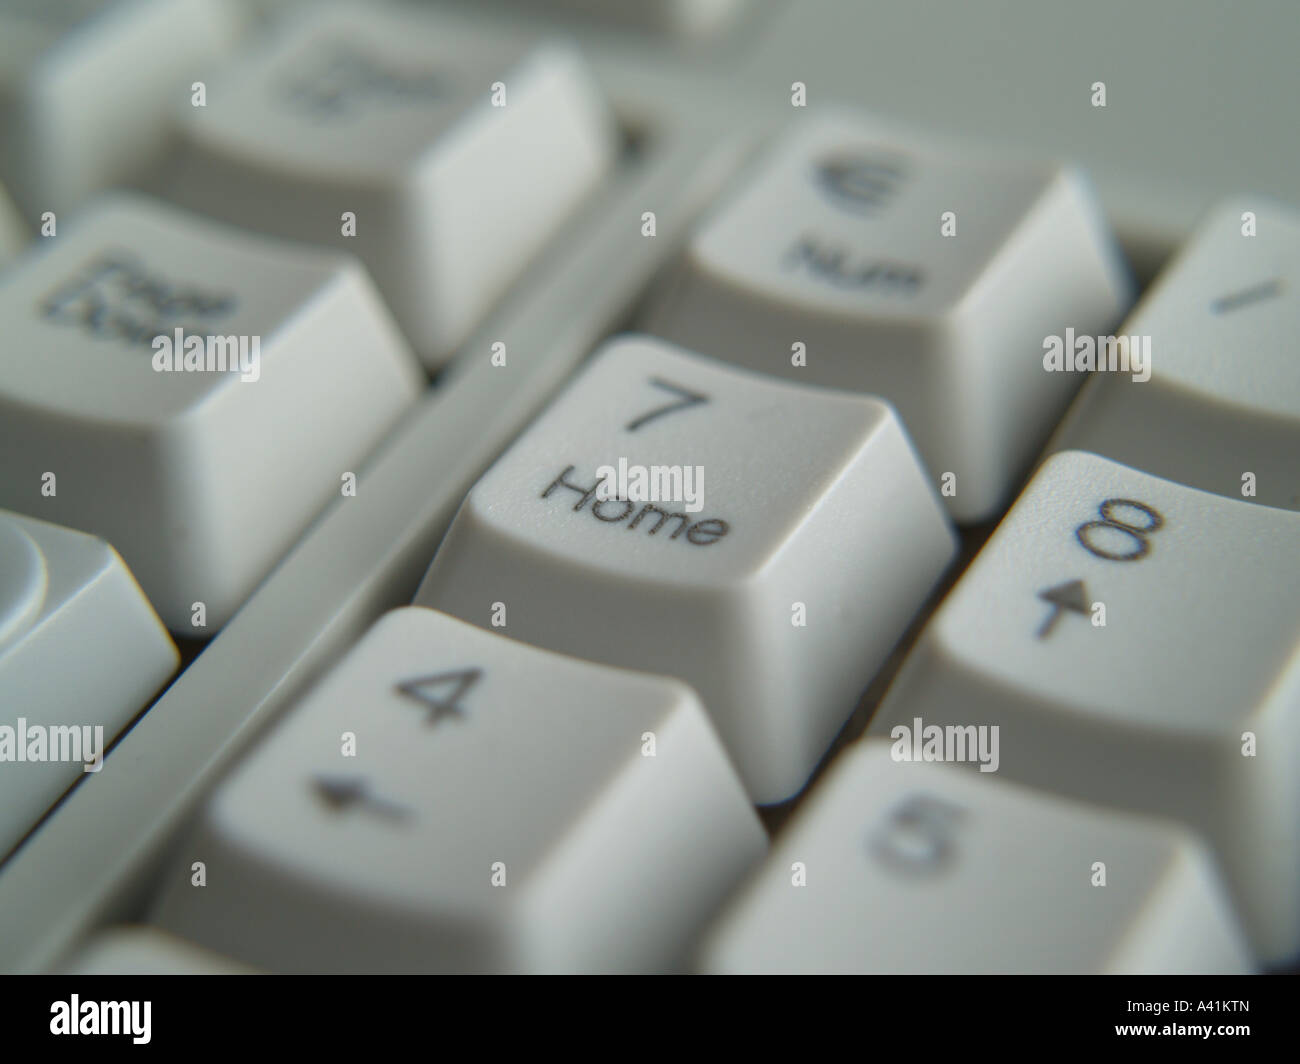 Keyboard home key close up. Stock Photo